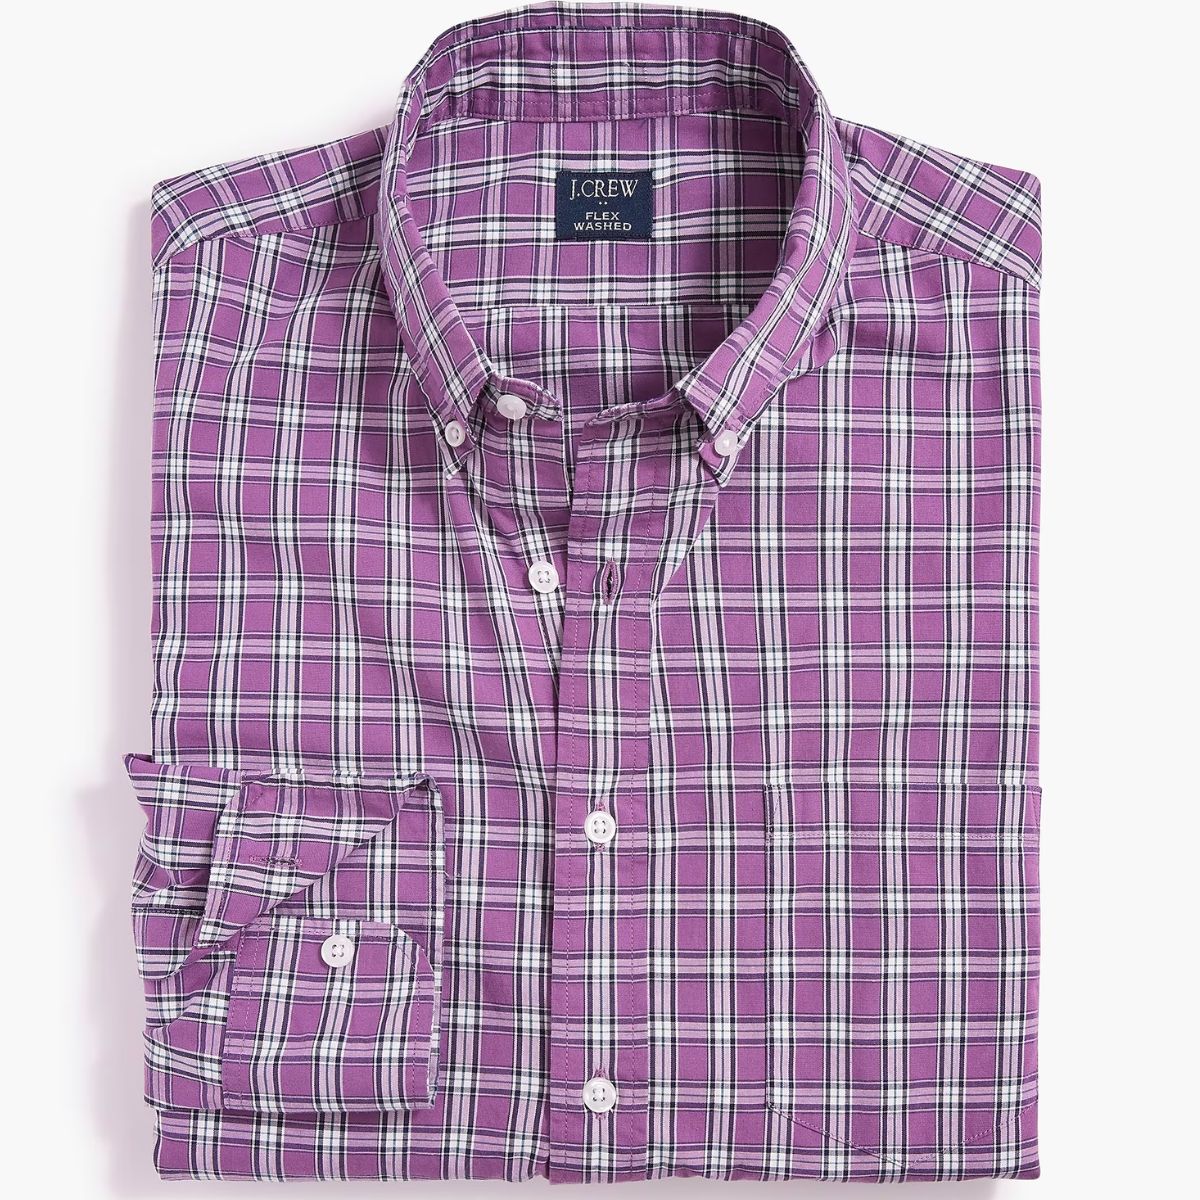 J. Crew Factory Slim Untucked Plaid Flex Casual Shirt in light purple plaid folded stock image